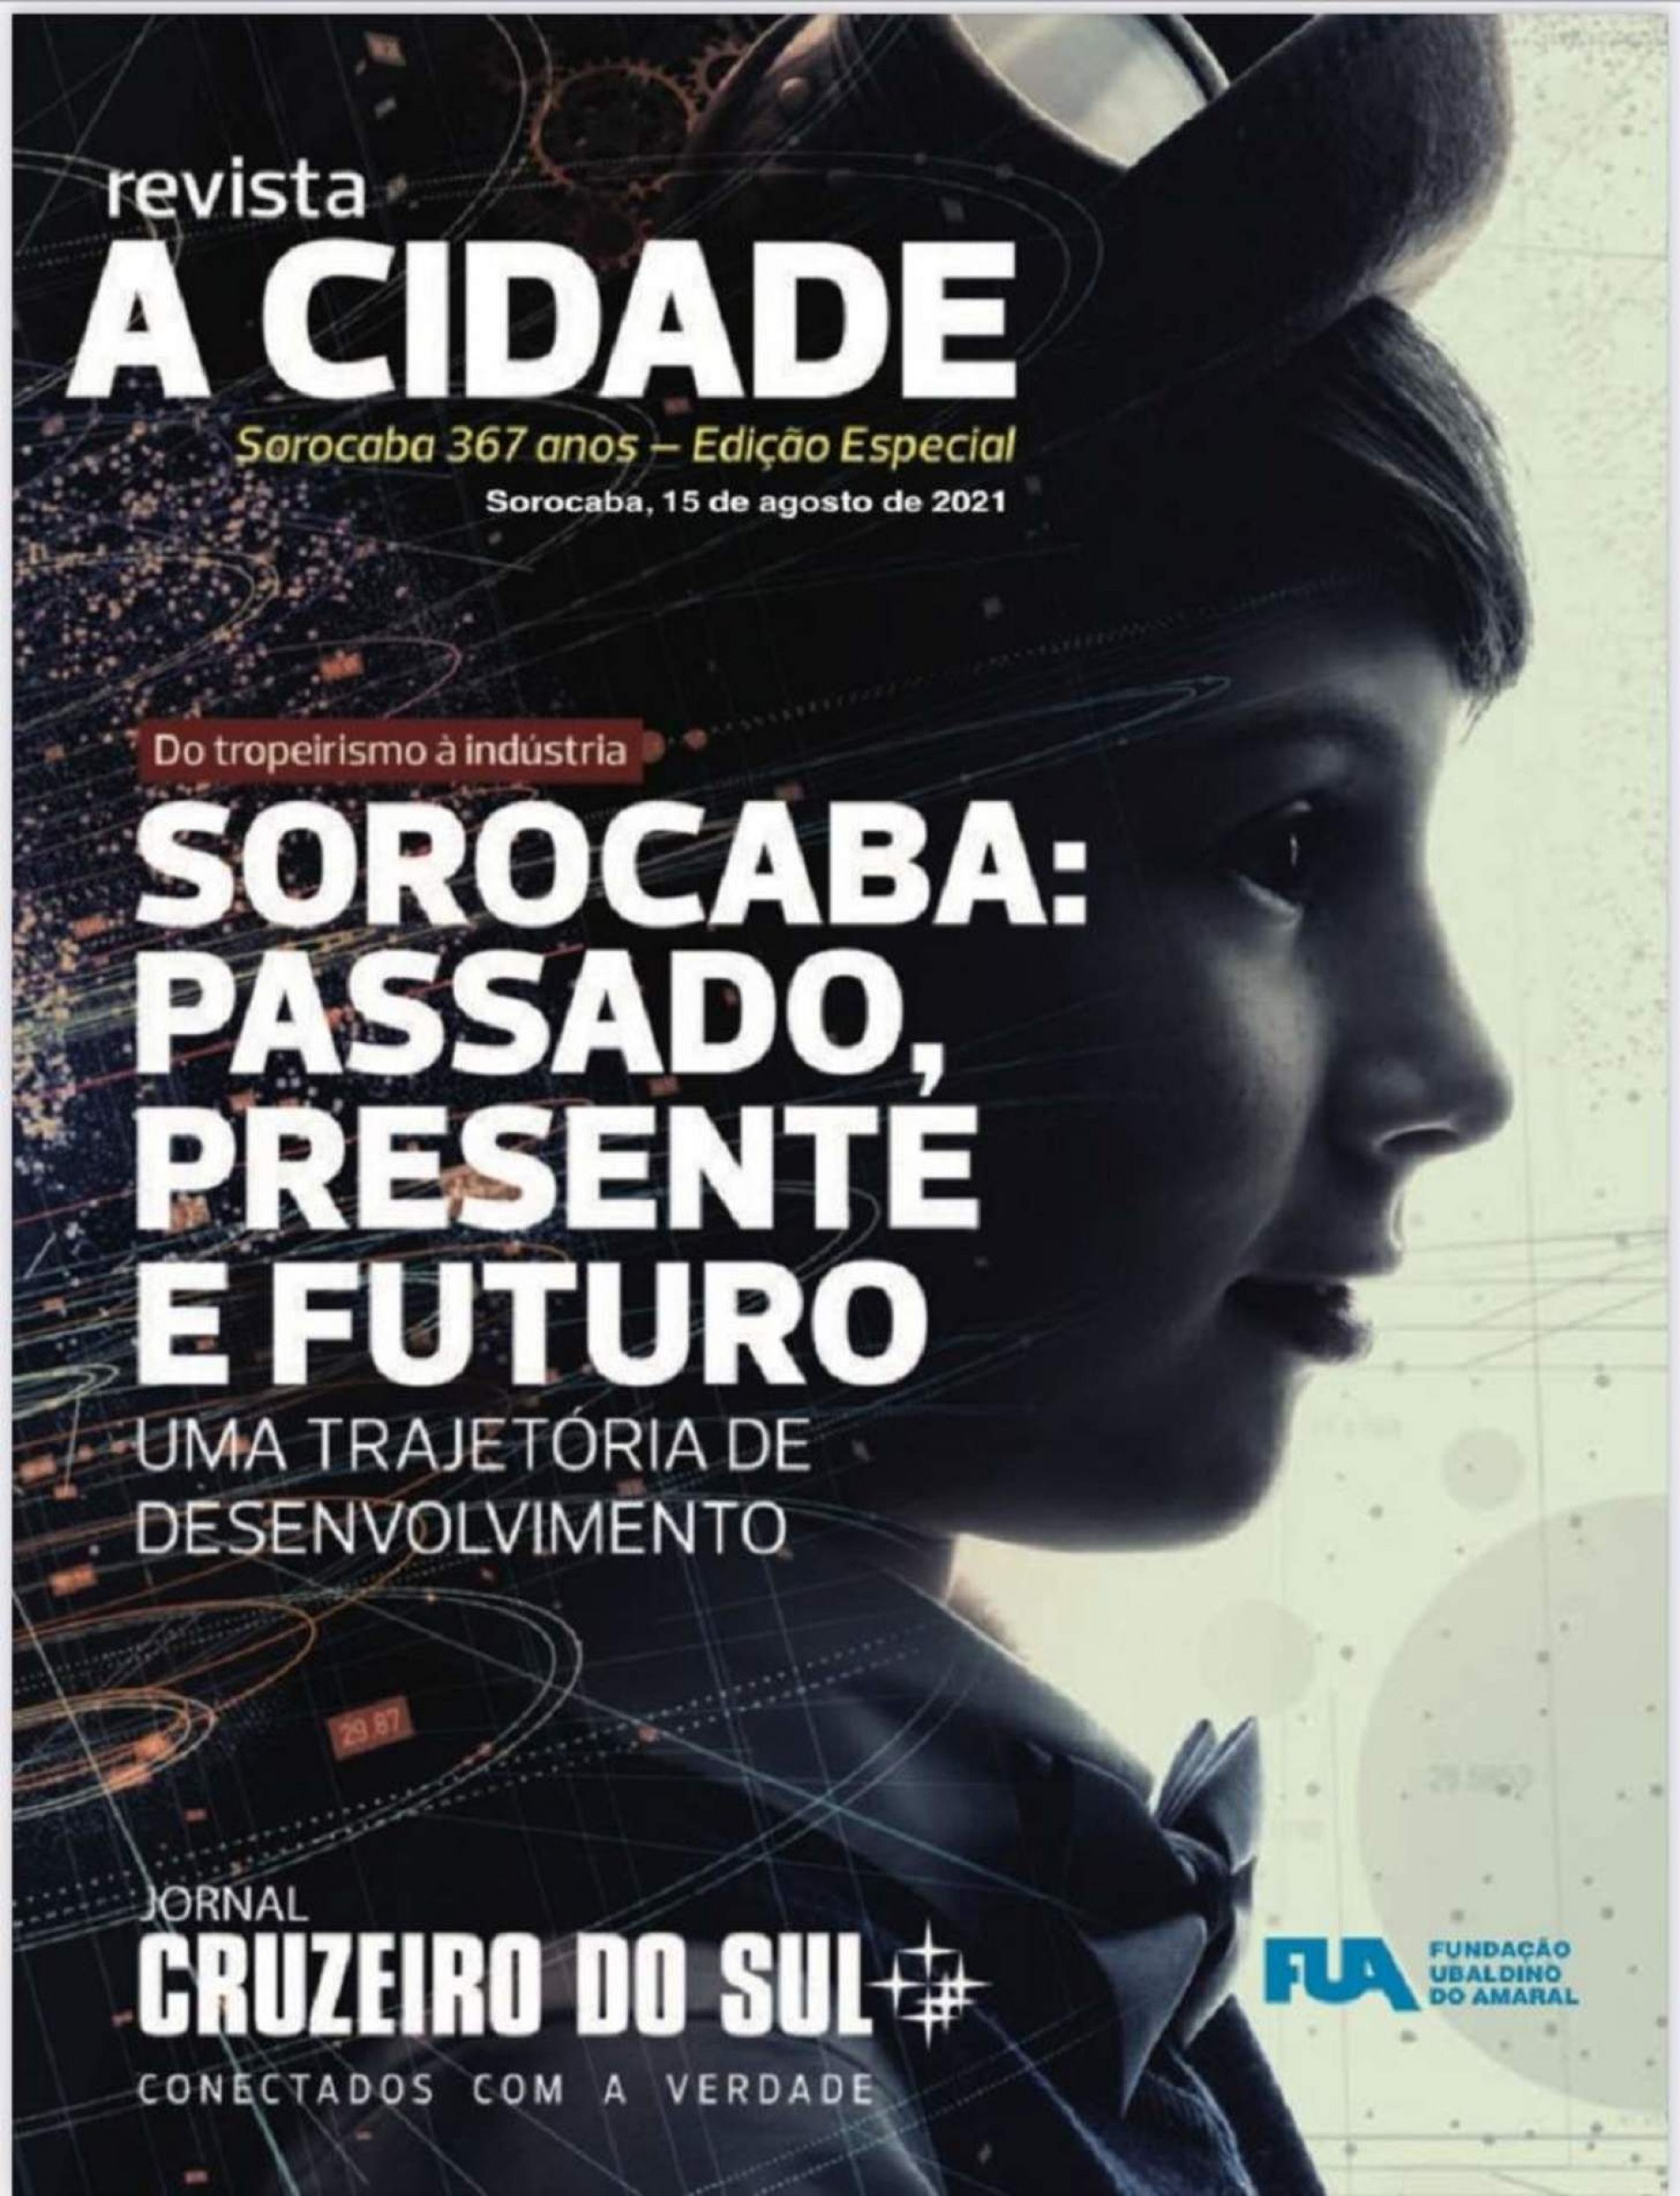 Revista A Cidade traz matéria especiais sobre os 367 anos de Sorocaba.